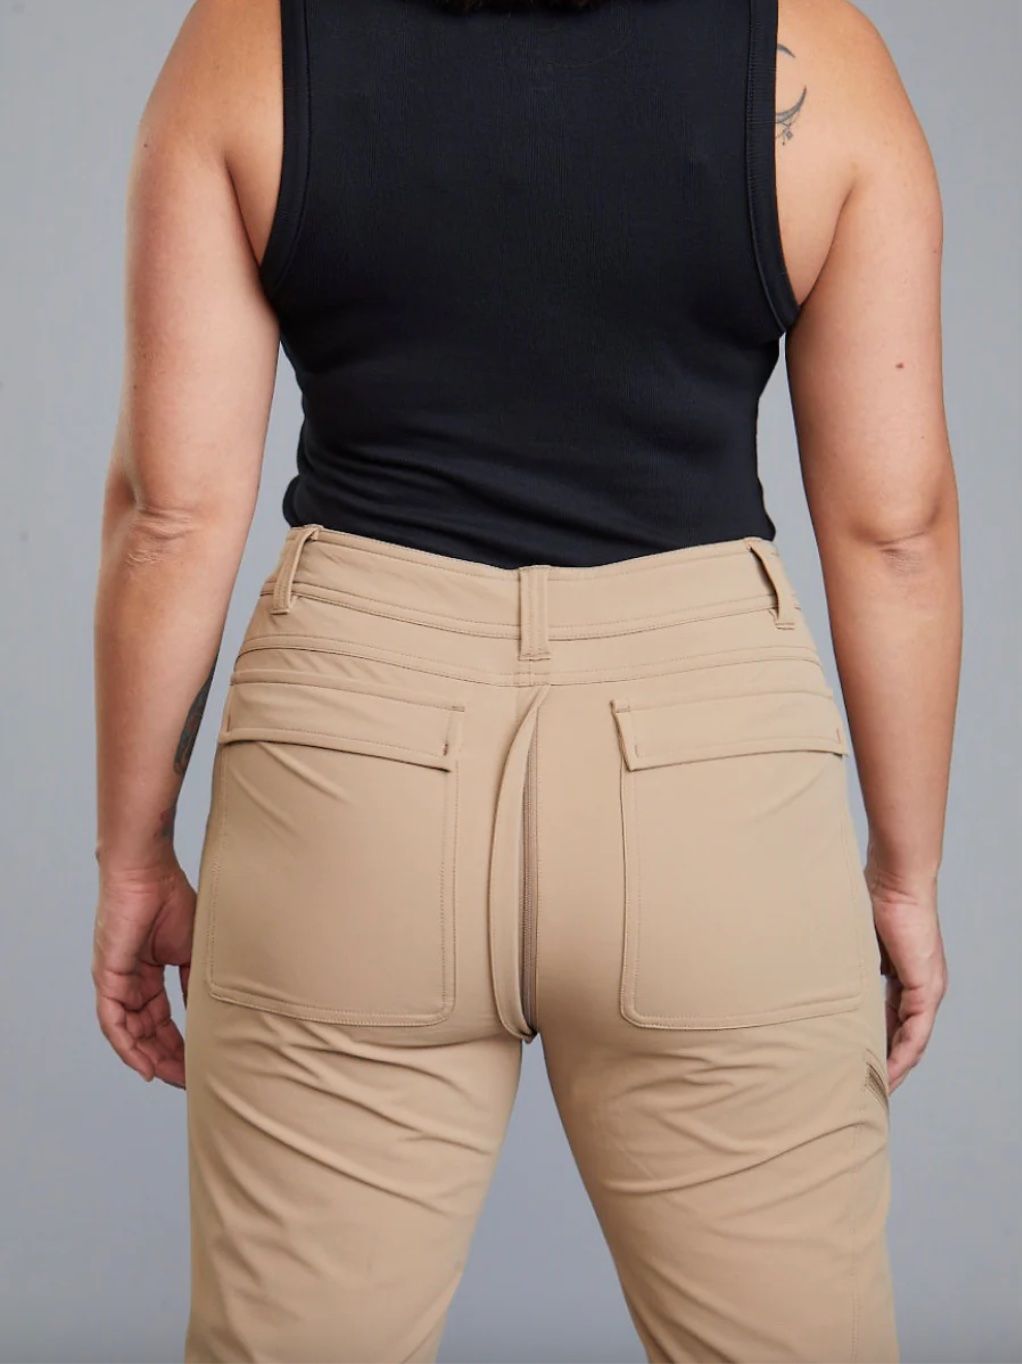 The back of a woman's pants shows a hidden second zipper.